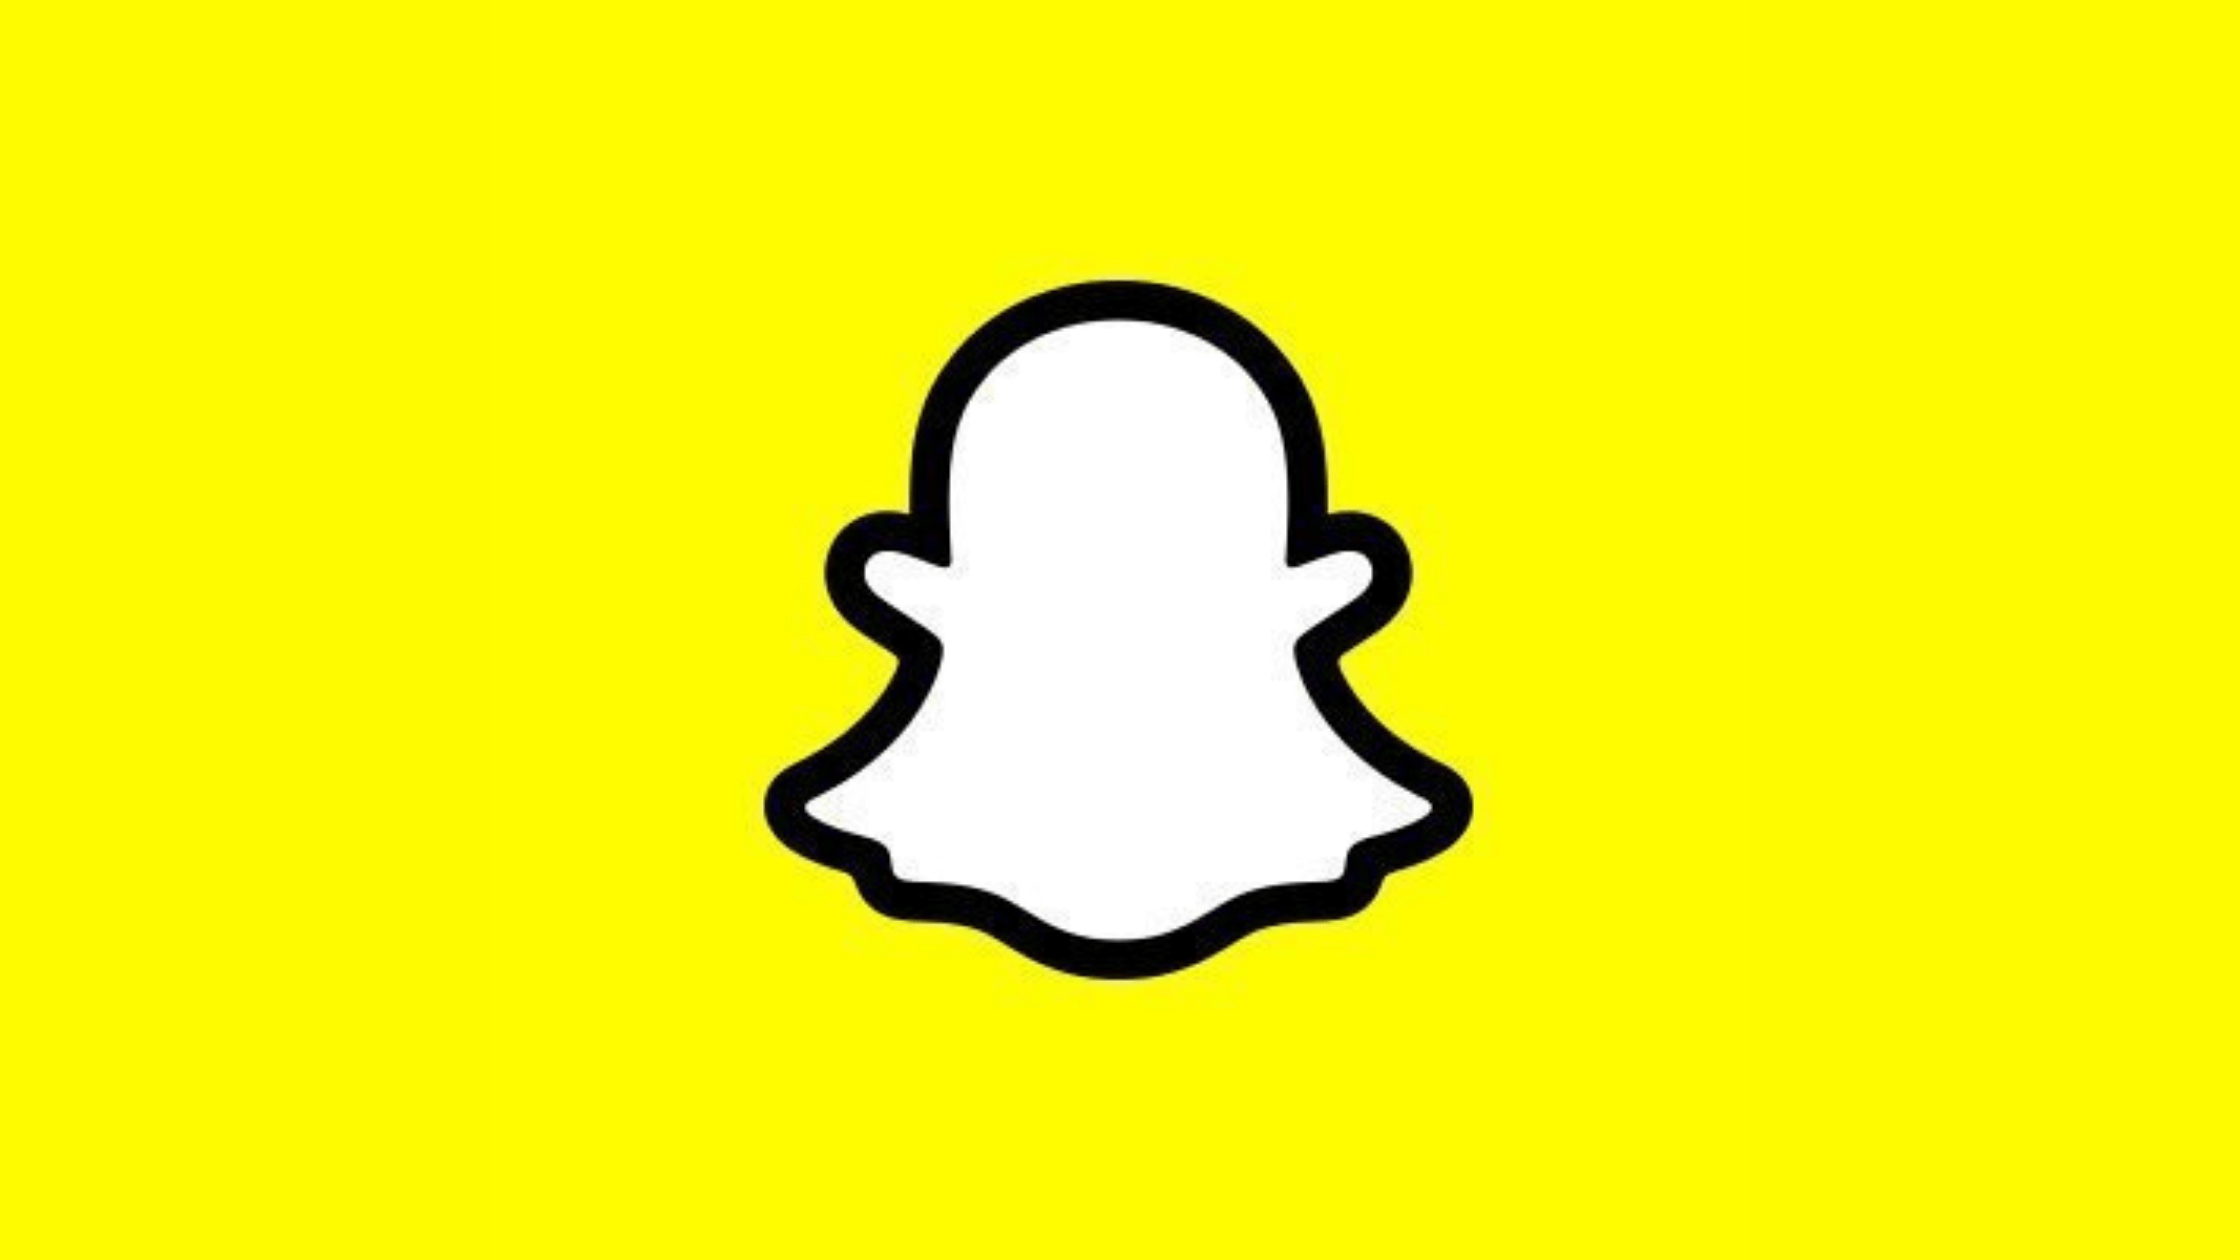 Set it to dark mode and keep enjoying Snapchat at night!